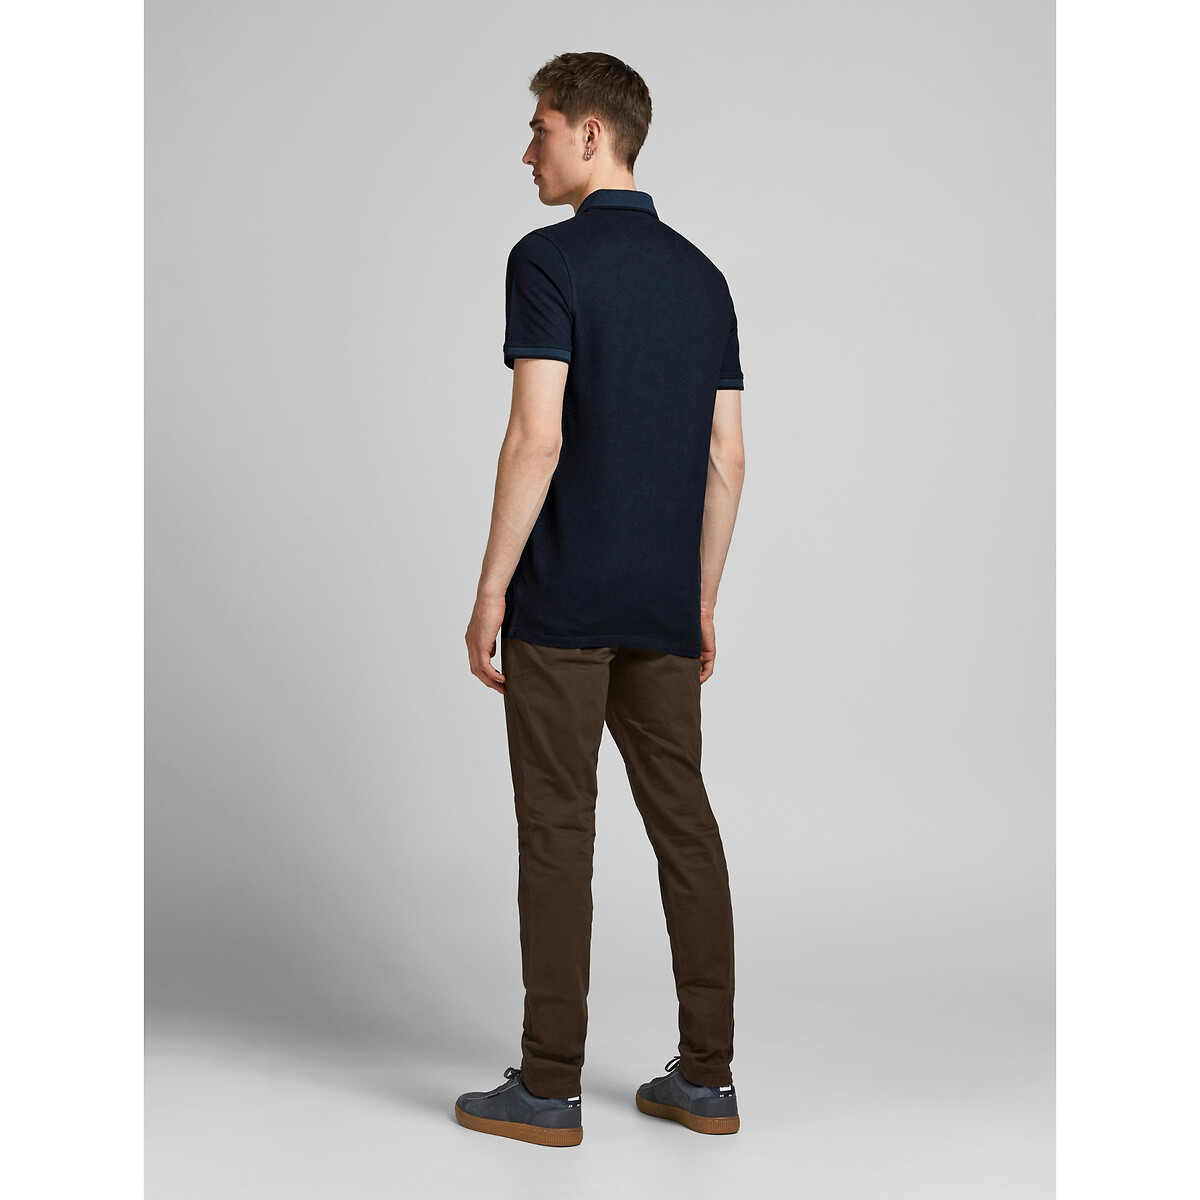 Mens Adults Polo Shirt Top Short Sleeve Striped Pocket Grey Navy M L XL XXL 07 